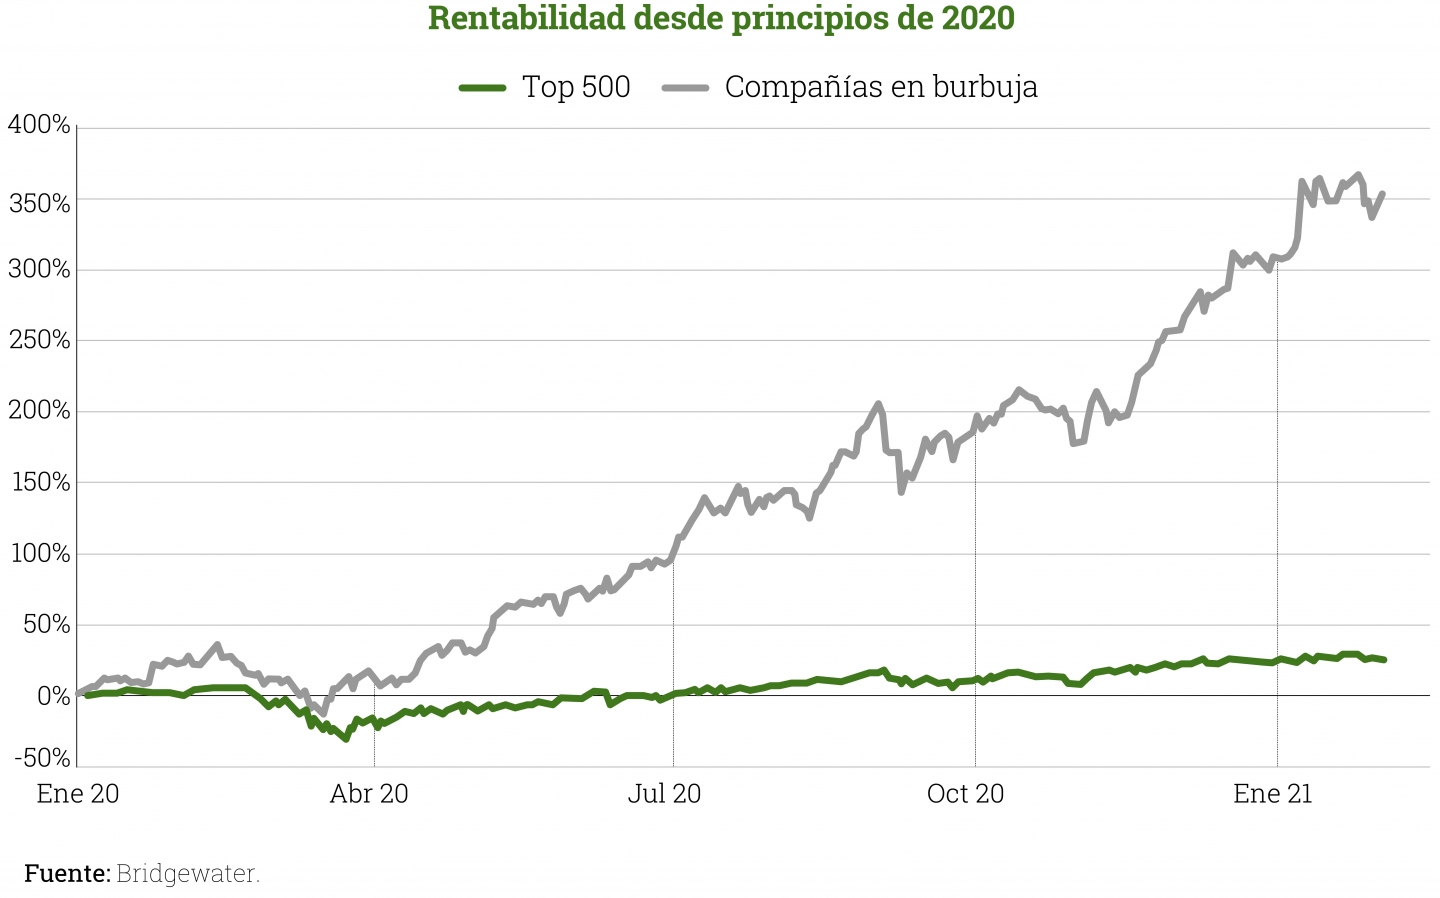 BlogMuerteValue-rentabilidad_principios_2020_burbuja